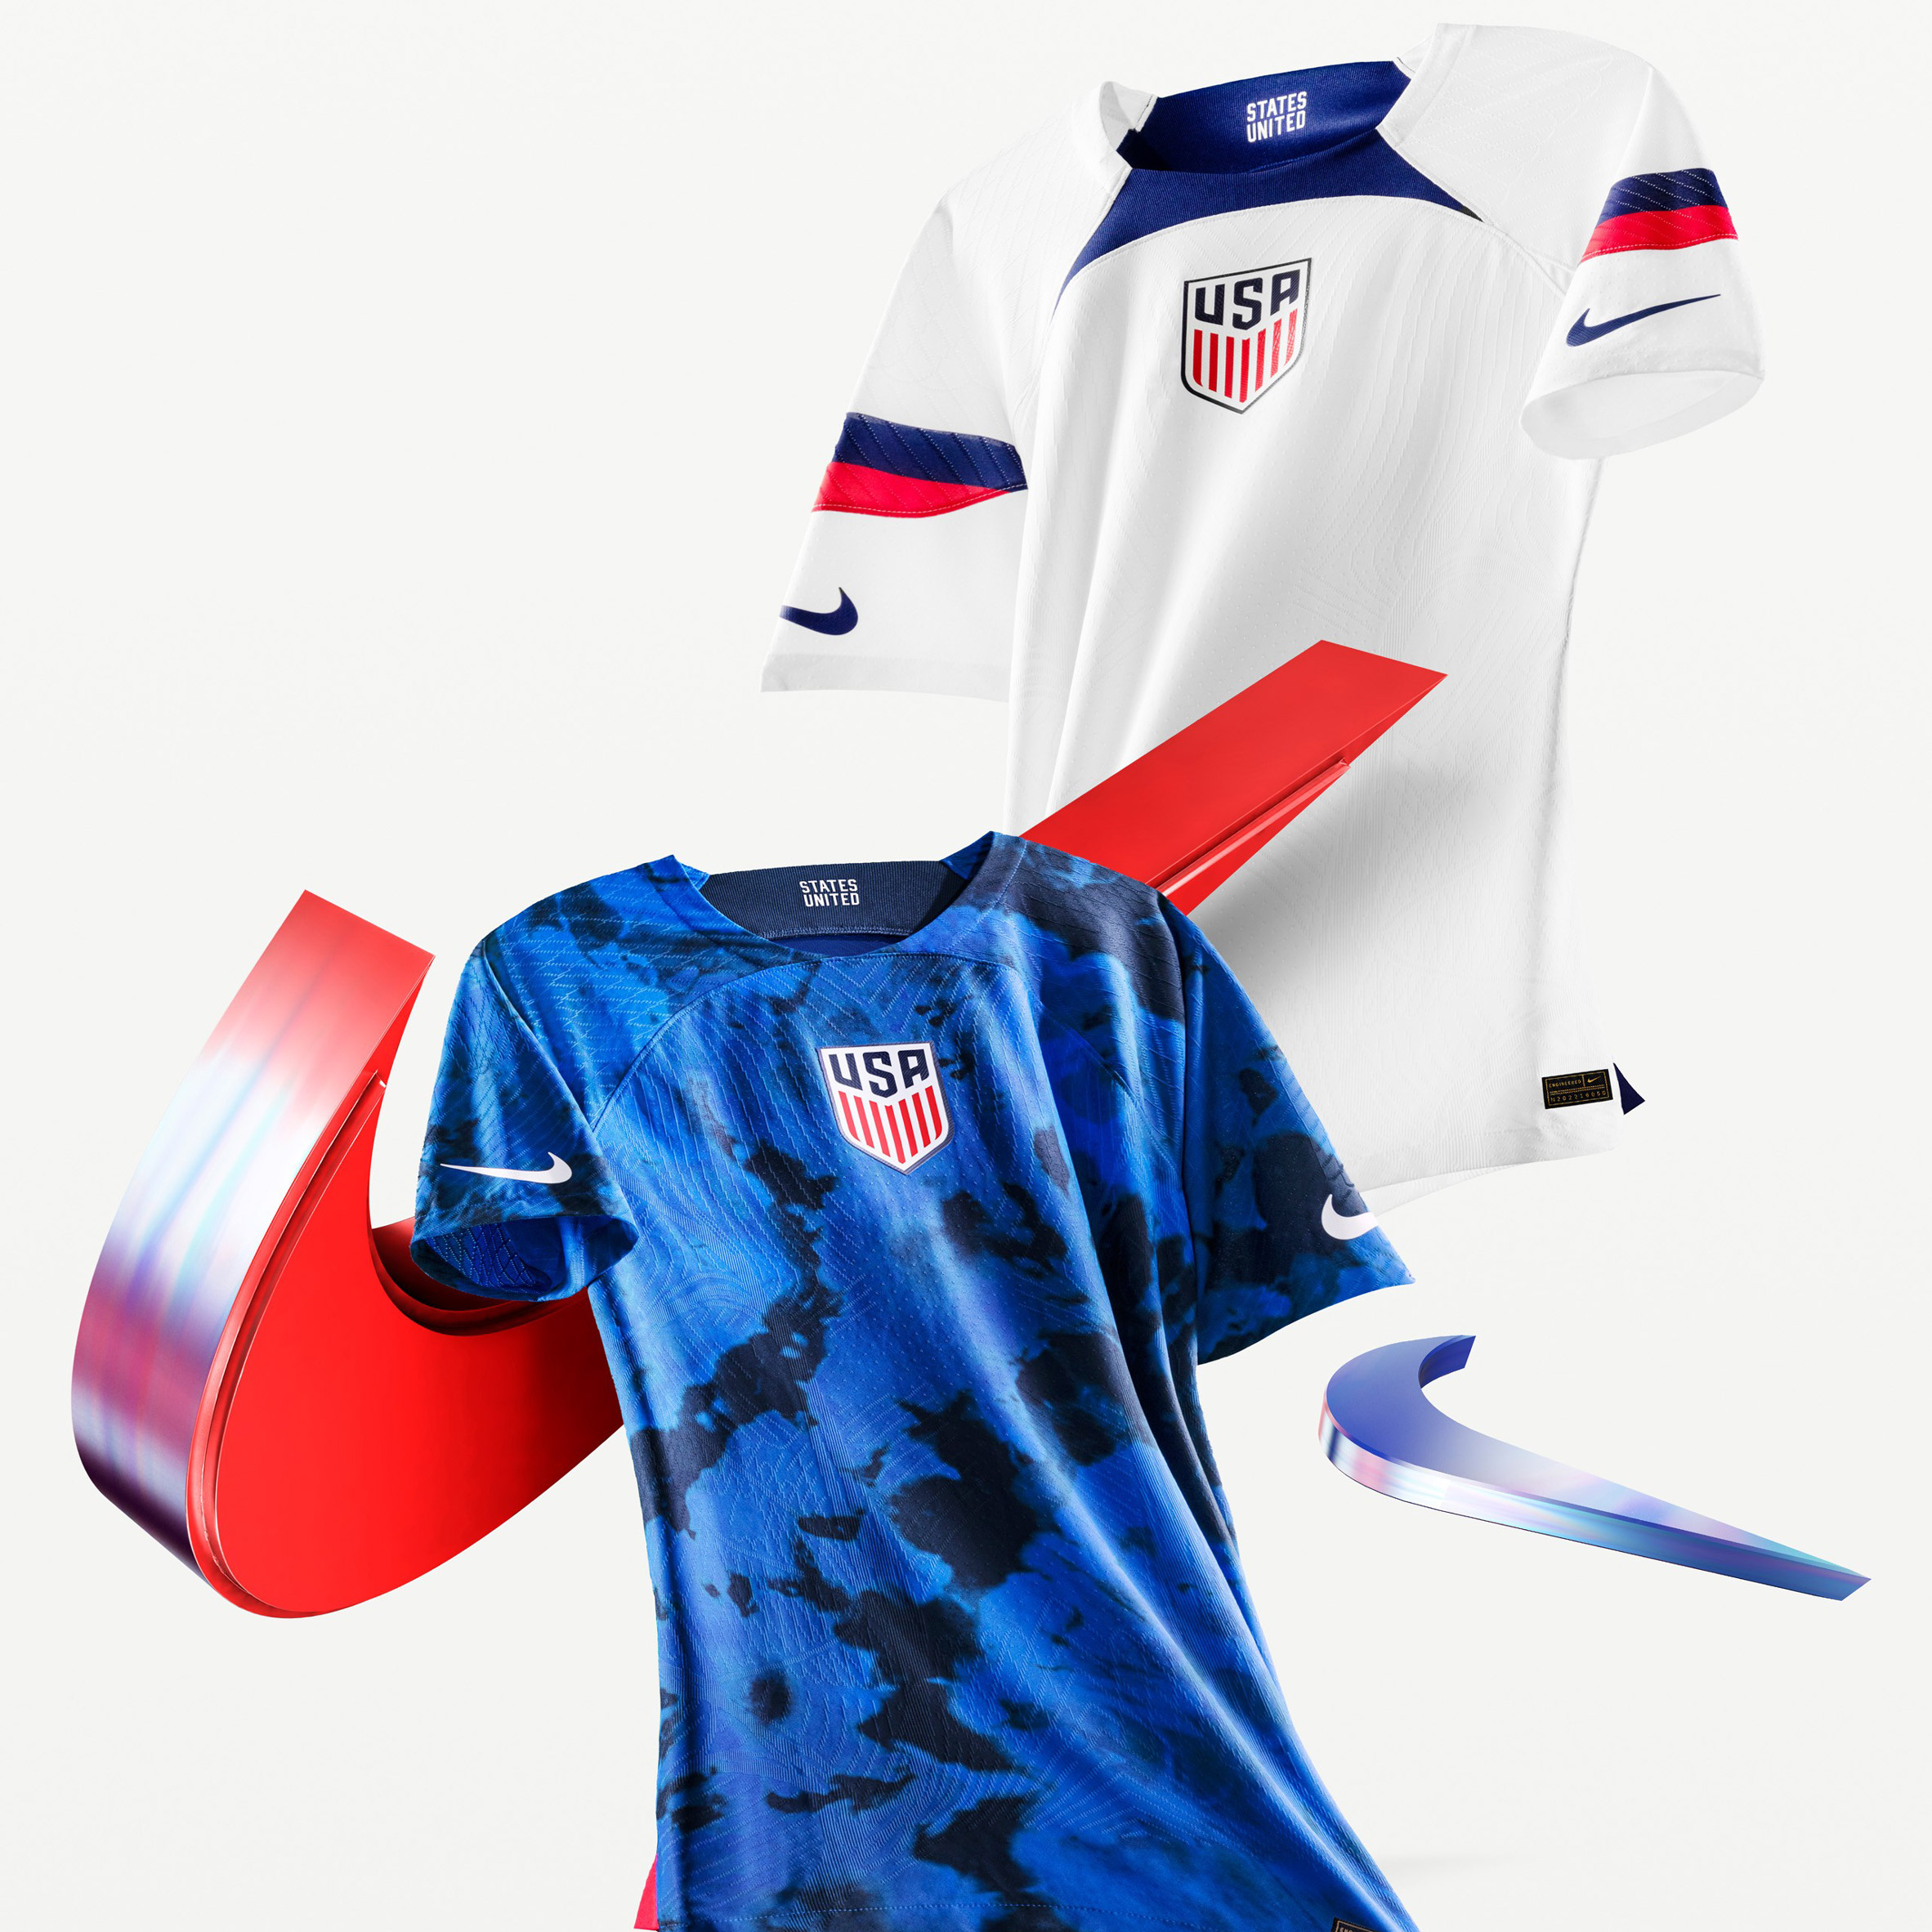 USA football kit by Nike